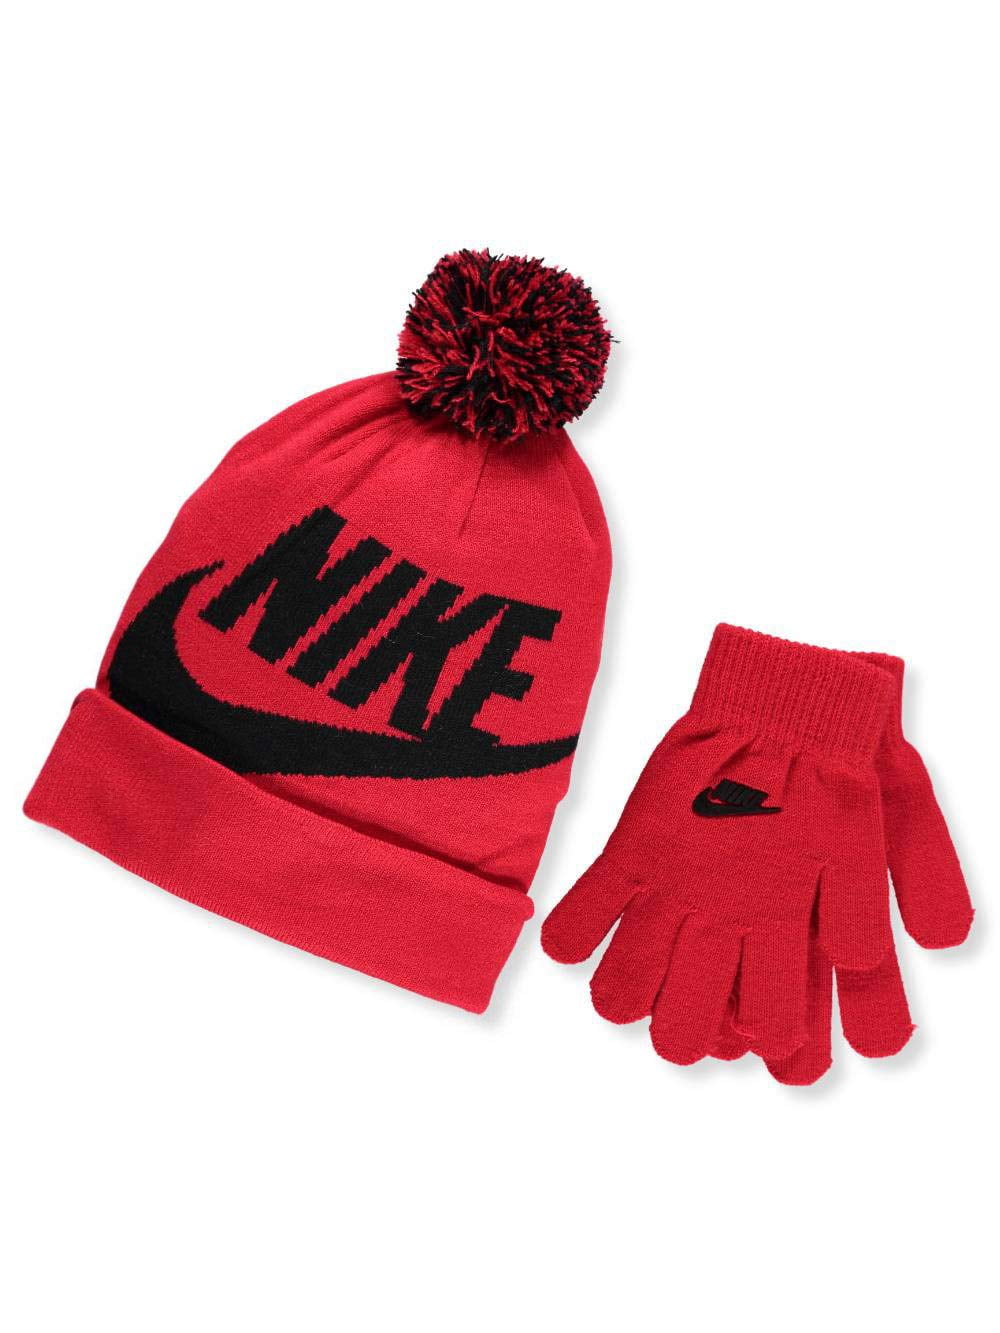 NIKE Boys' Beanie & Gloves Set (Youth One Size) - University red, 8-20 ...